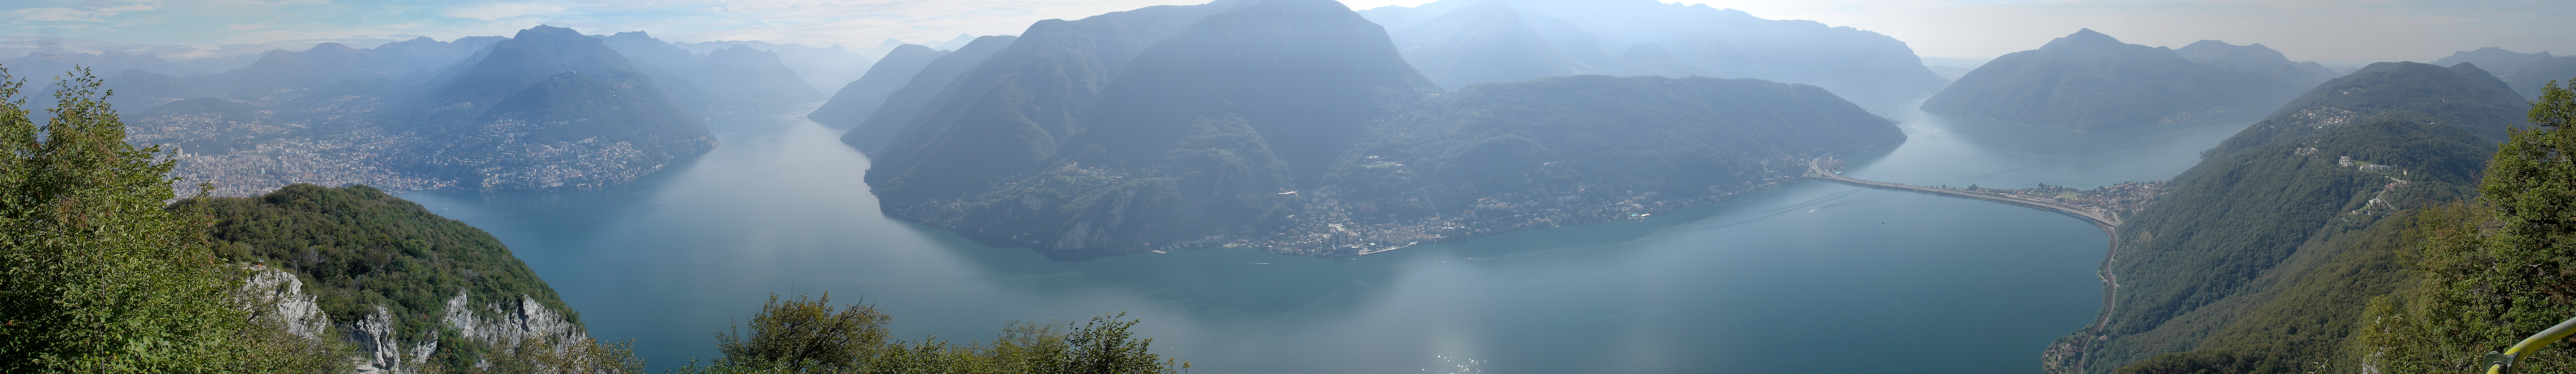 Panorama vom Monte San Salvatore aus.jpg